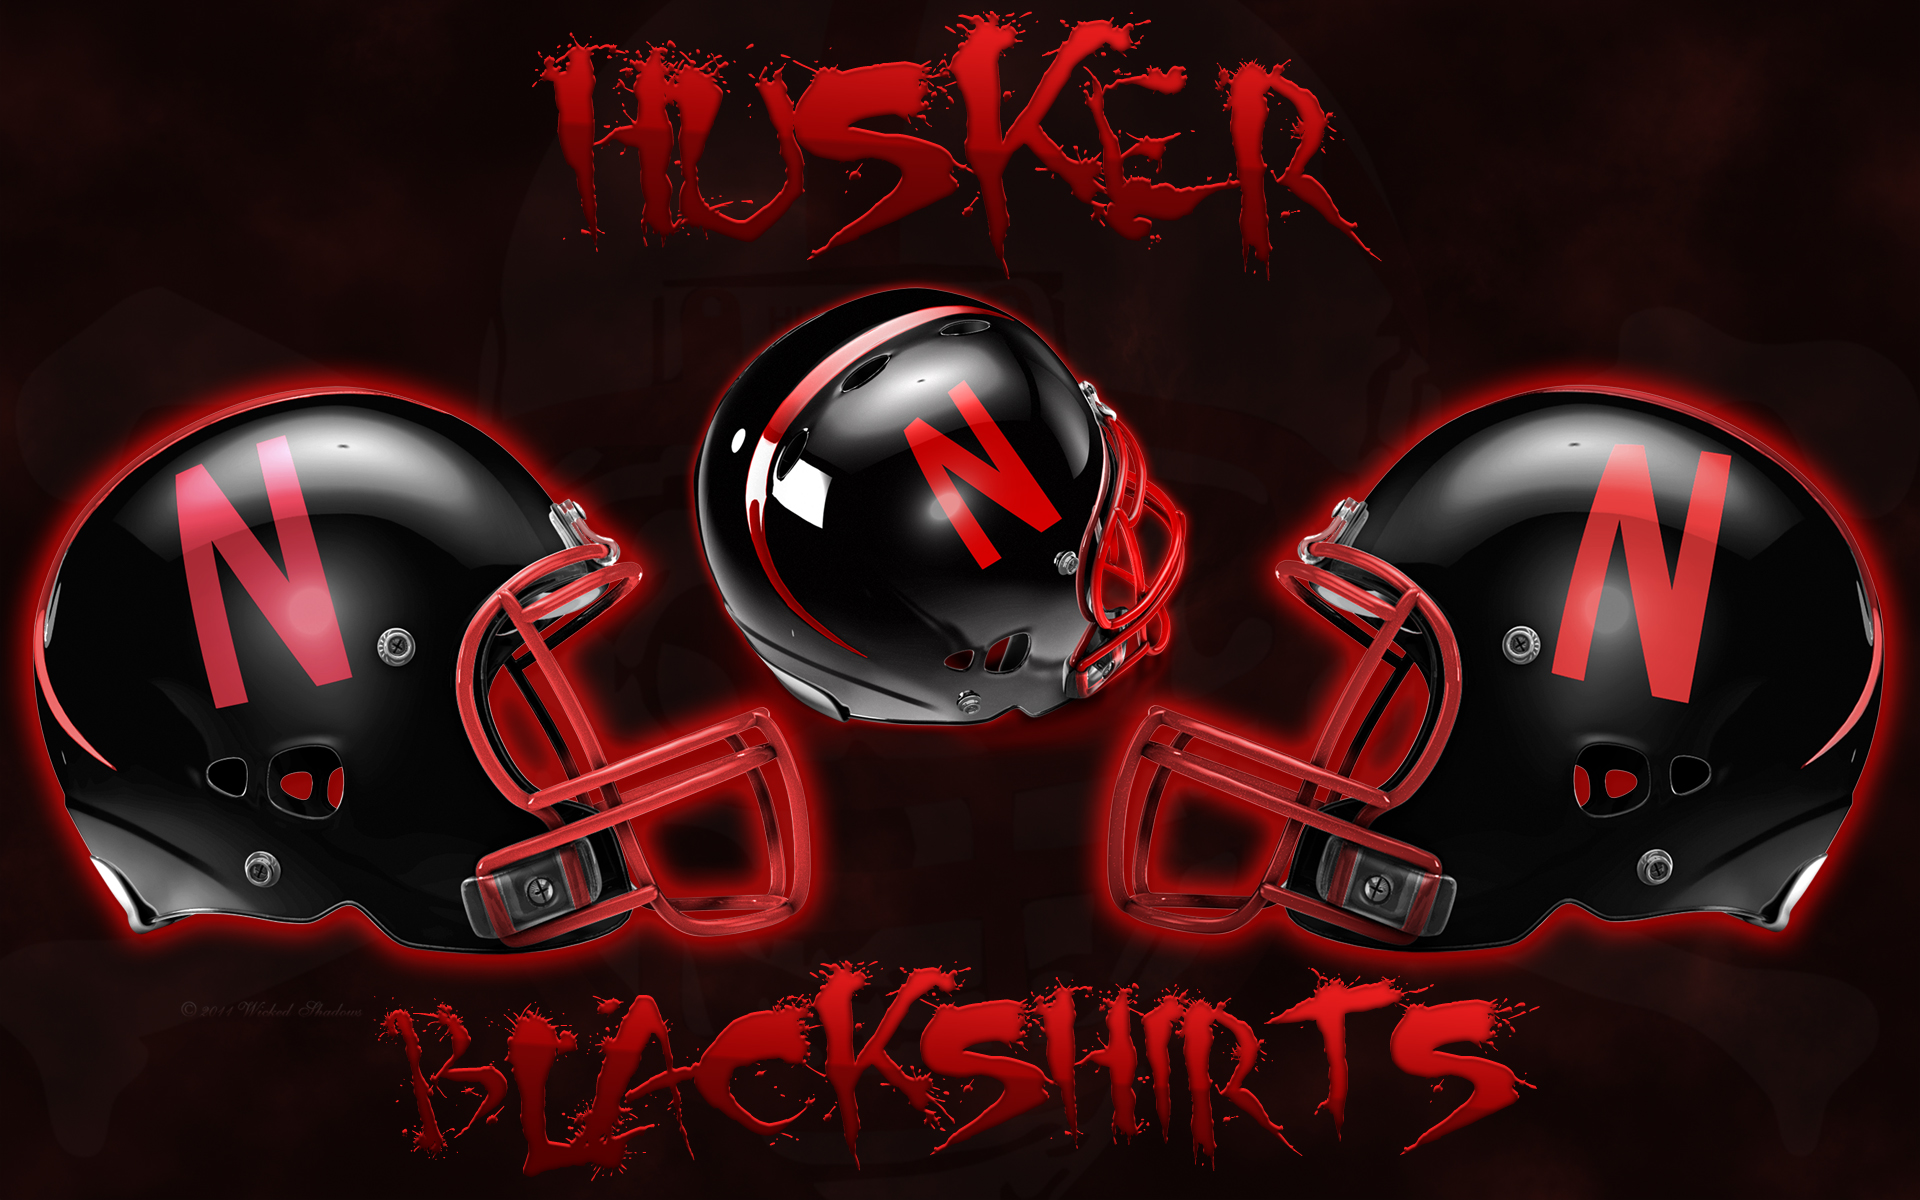 Husker Blackshirts Black Helmets Wallpaper